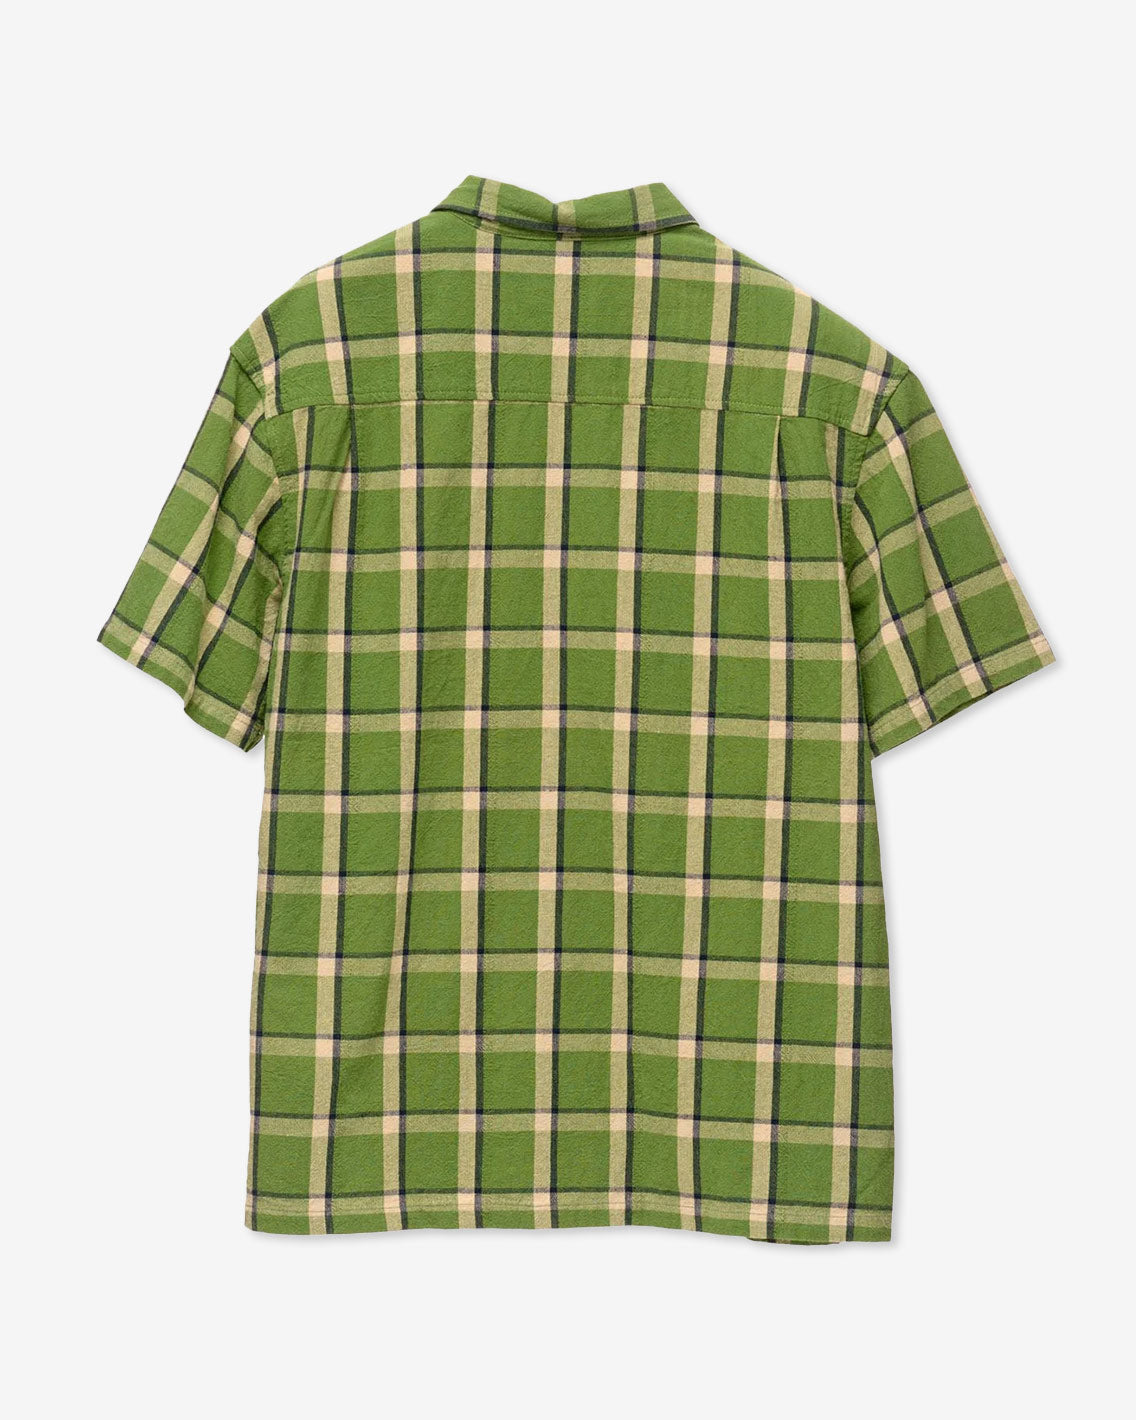 Stussy - Burke Pocket Shirt - Green